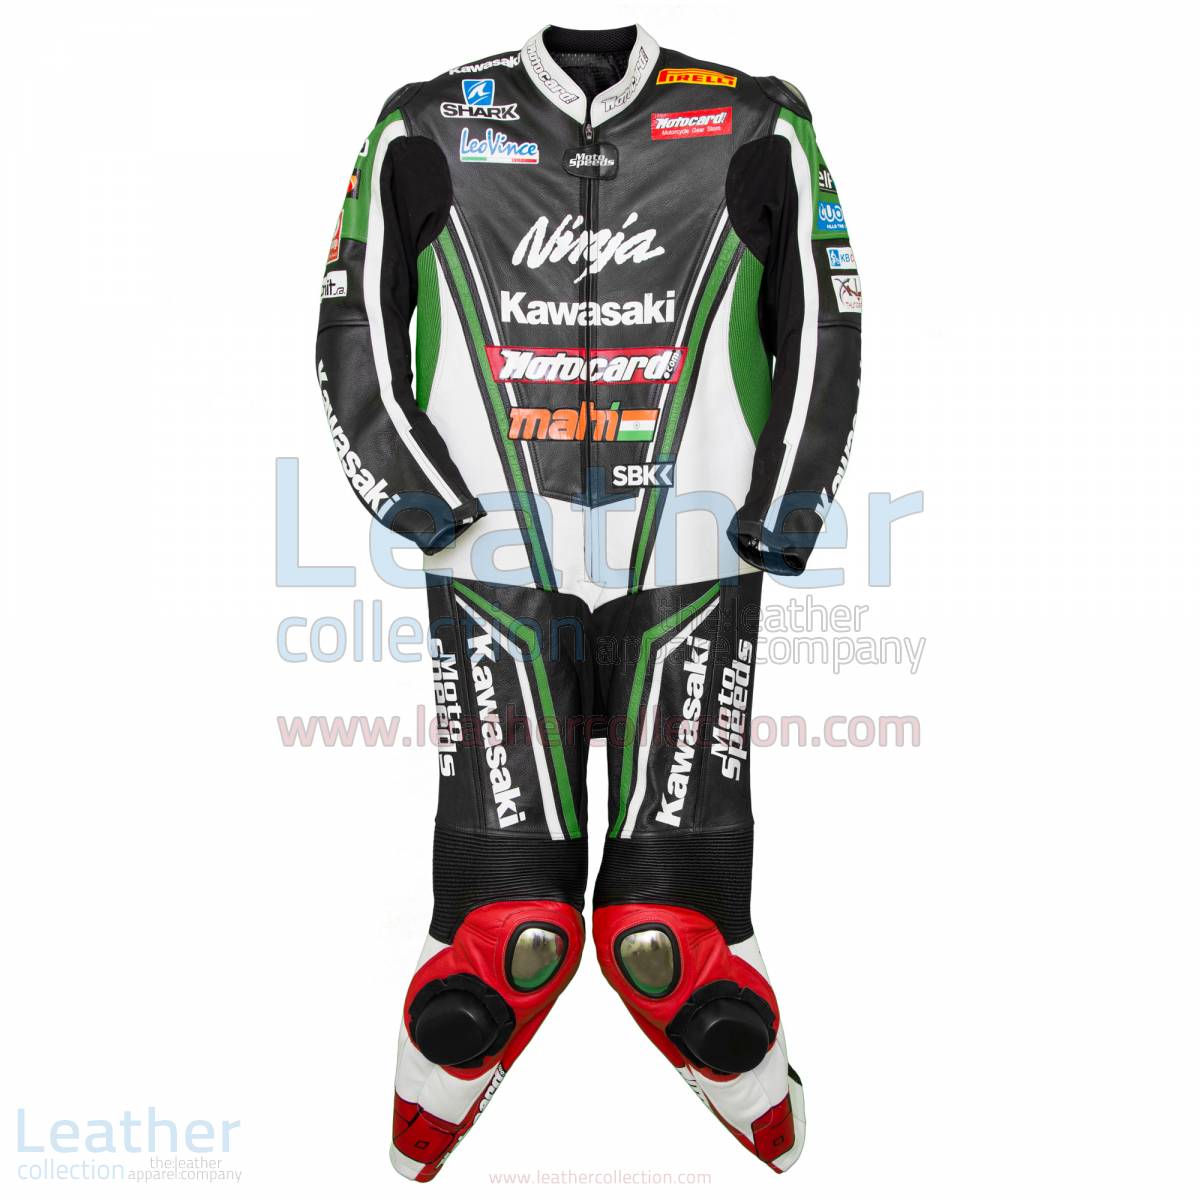 Kawasaki Ninja Tom Sykes 2013 Champion Leathers – Kawasaki Suit